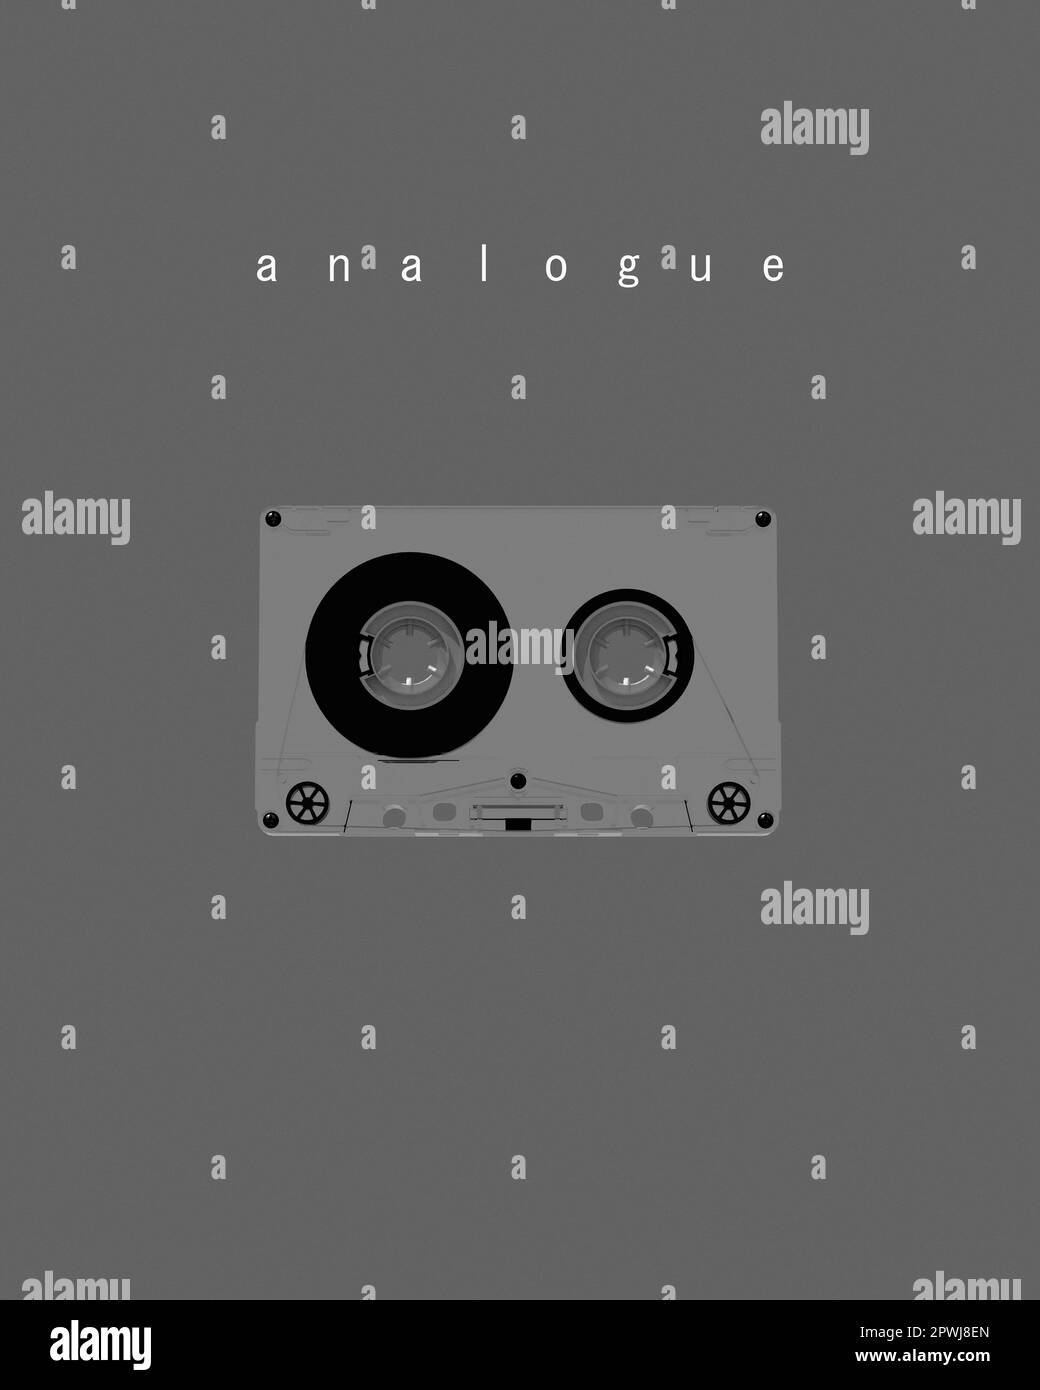 Analogue Cassette Tape Retro Music Storage Format Magnetic Audio Cassette Nostalgia Grey Black White Film Grain 3d illustration render digital Stock Photo